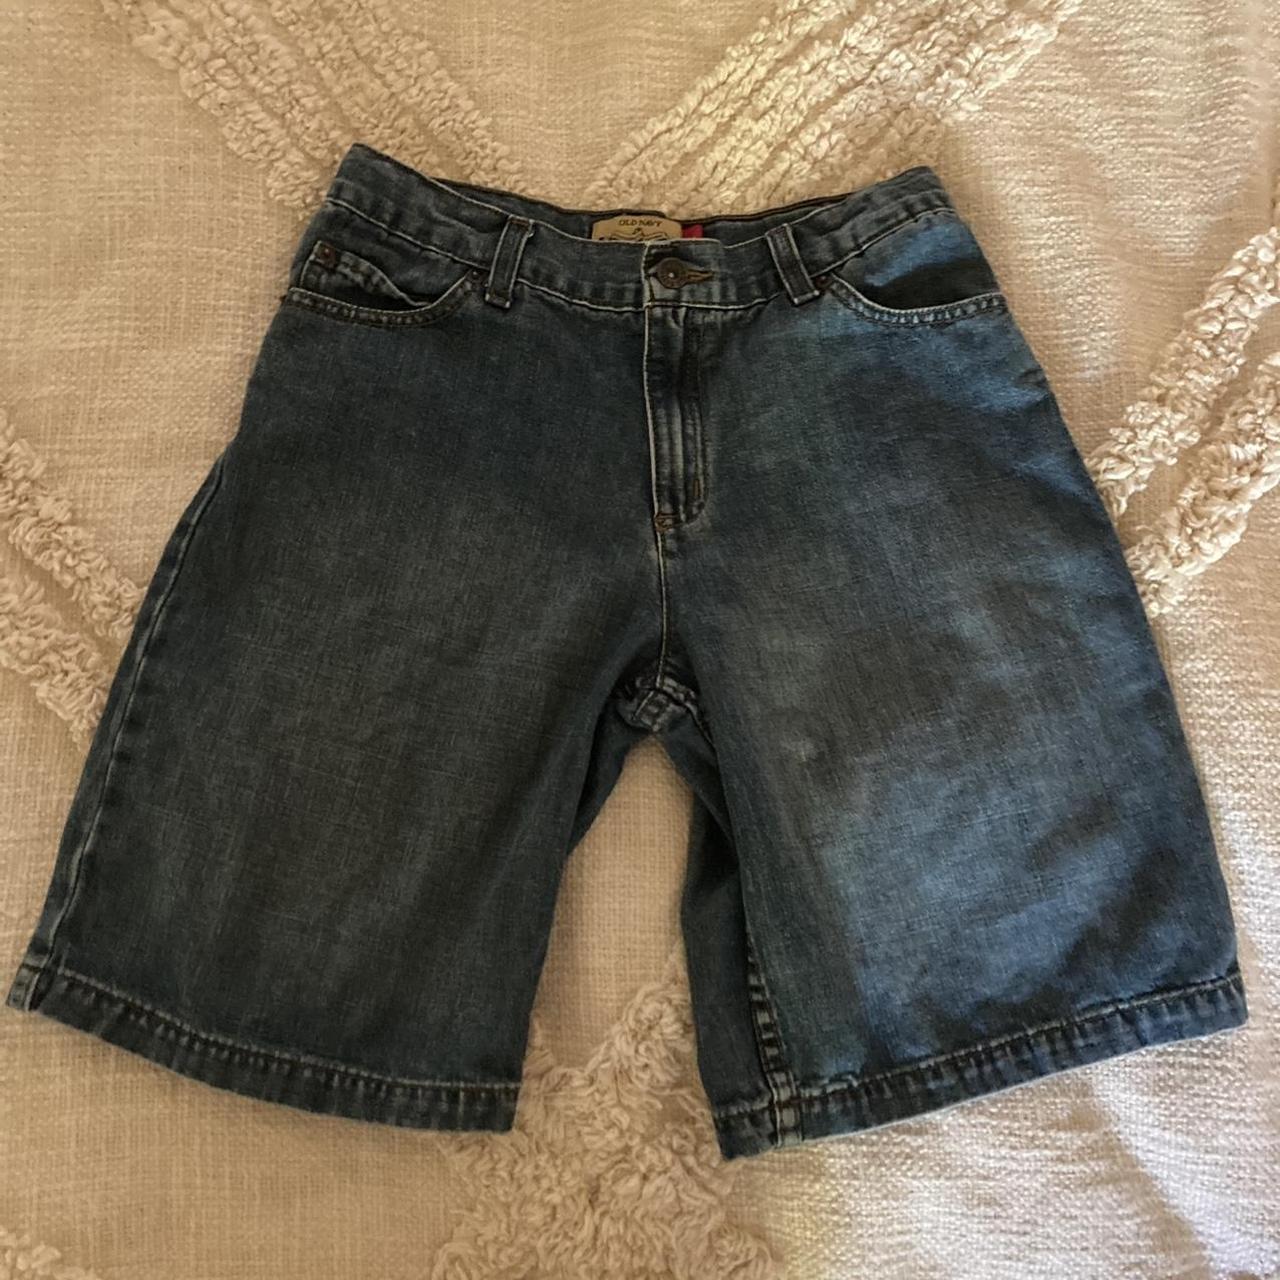 Vintage jean jorts featuring back pockets, marked a... - Depop